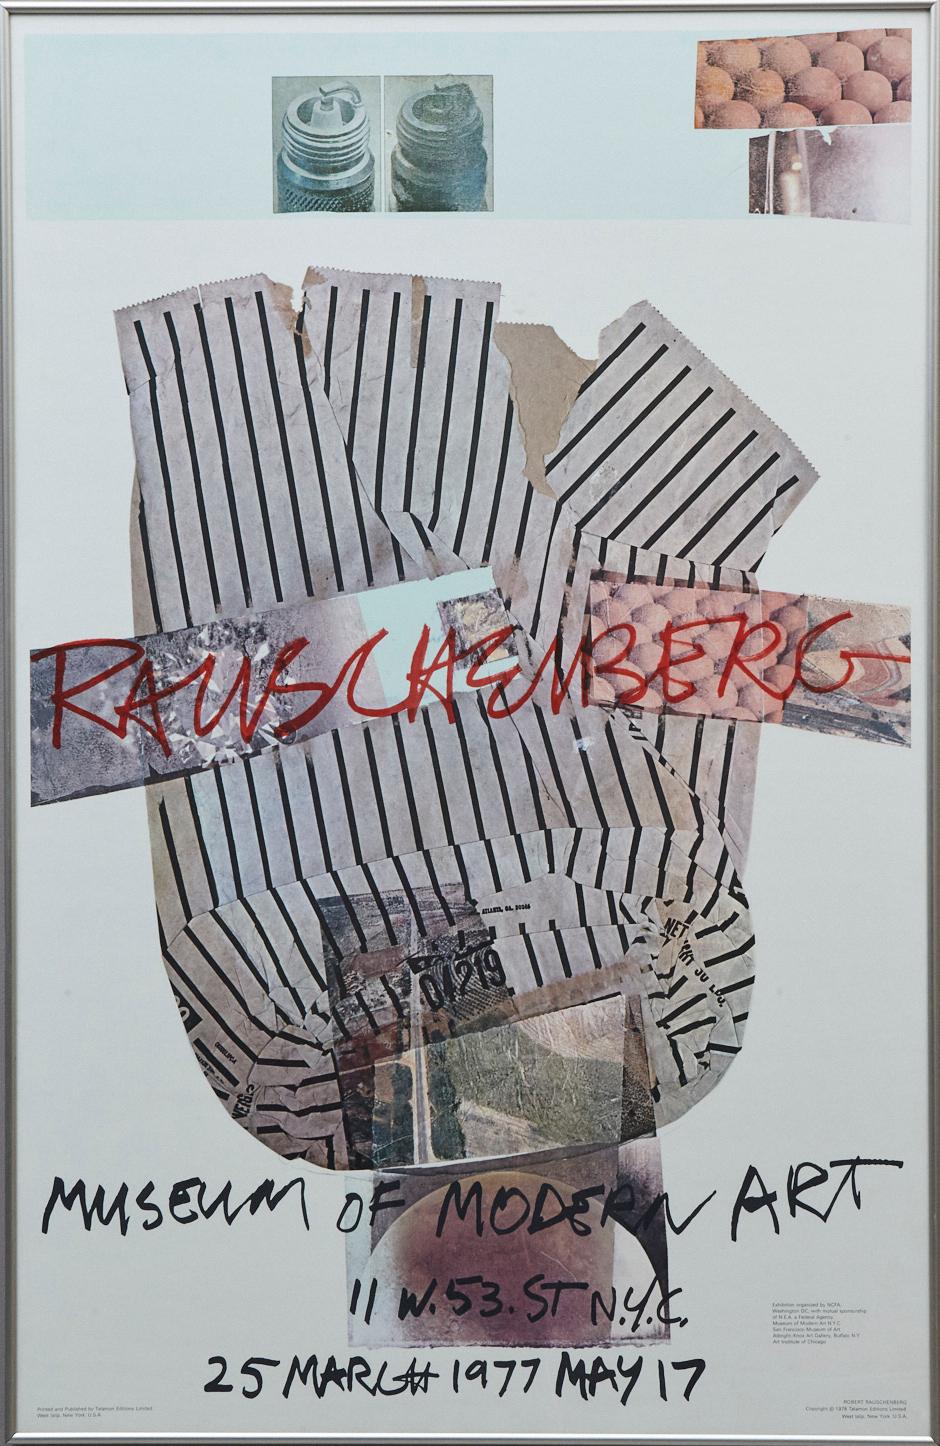 Robert Rauschenberg Abstract Print - Museum of Modern Art, New York, 25 March - May 17 1977